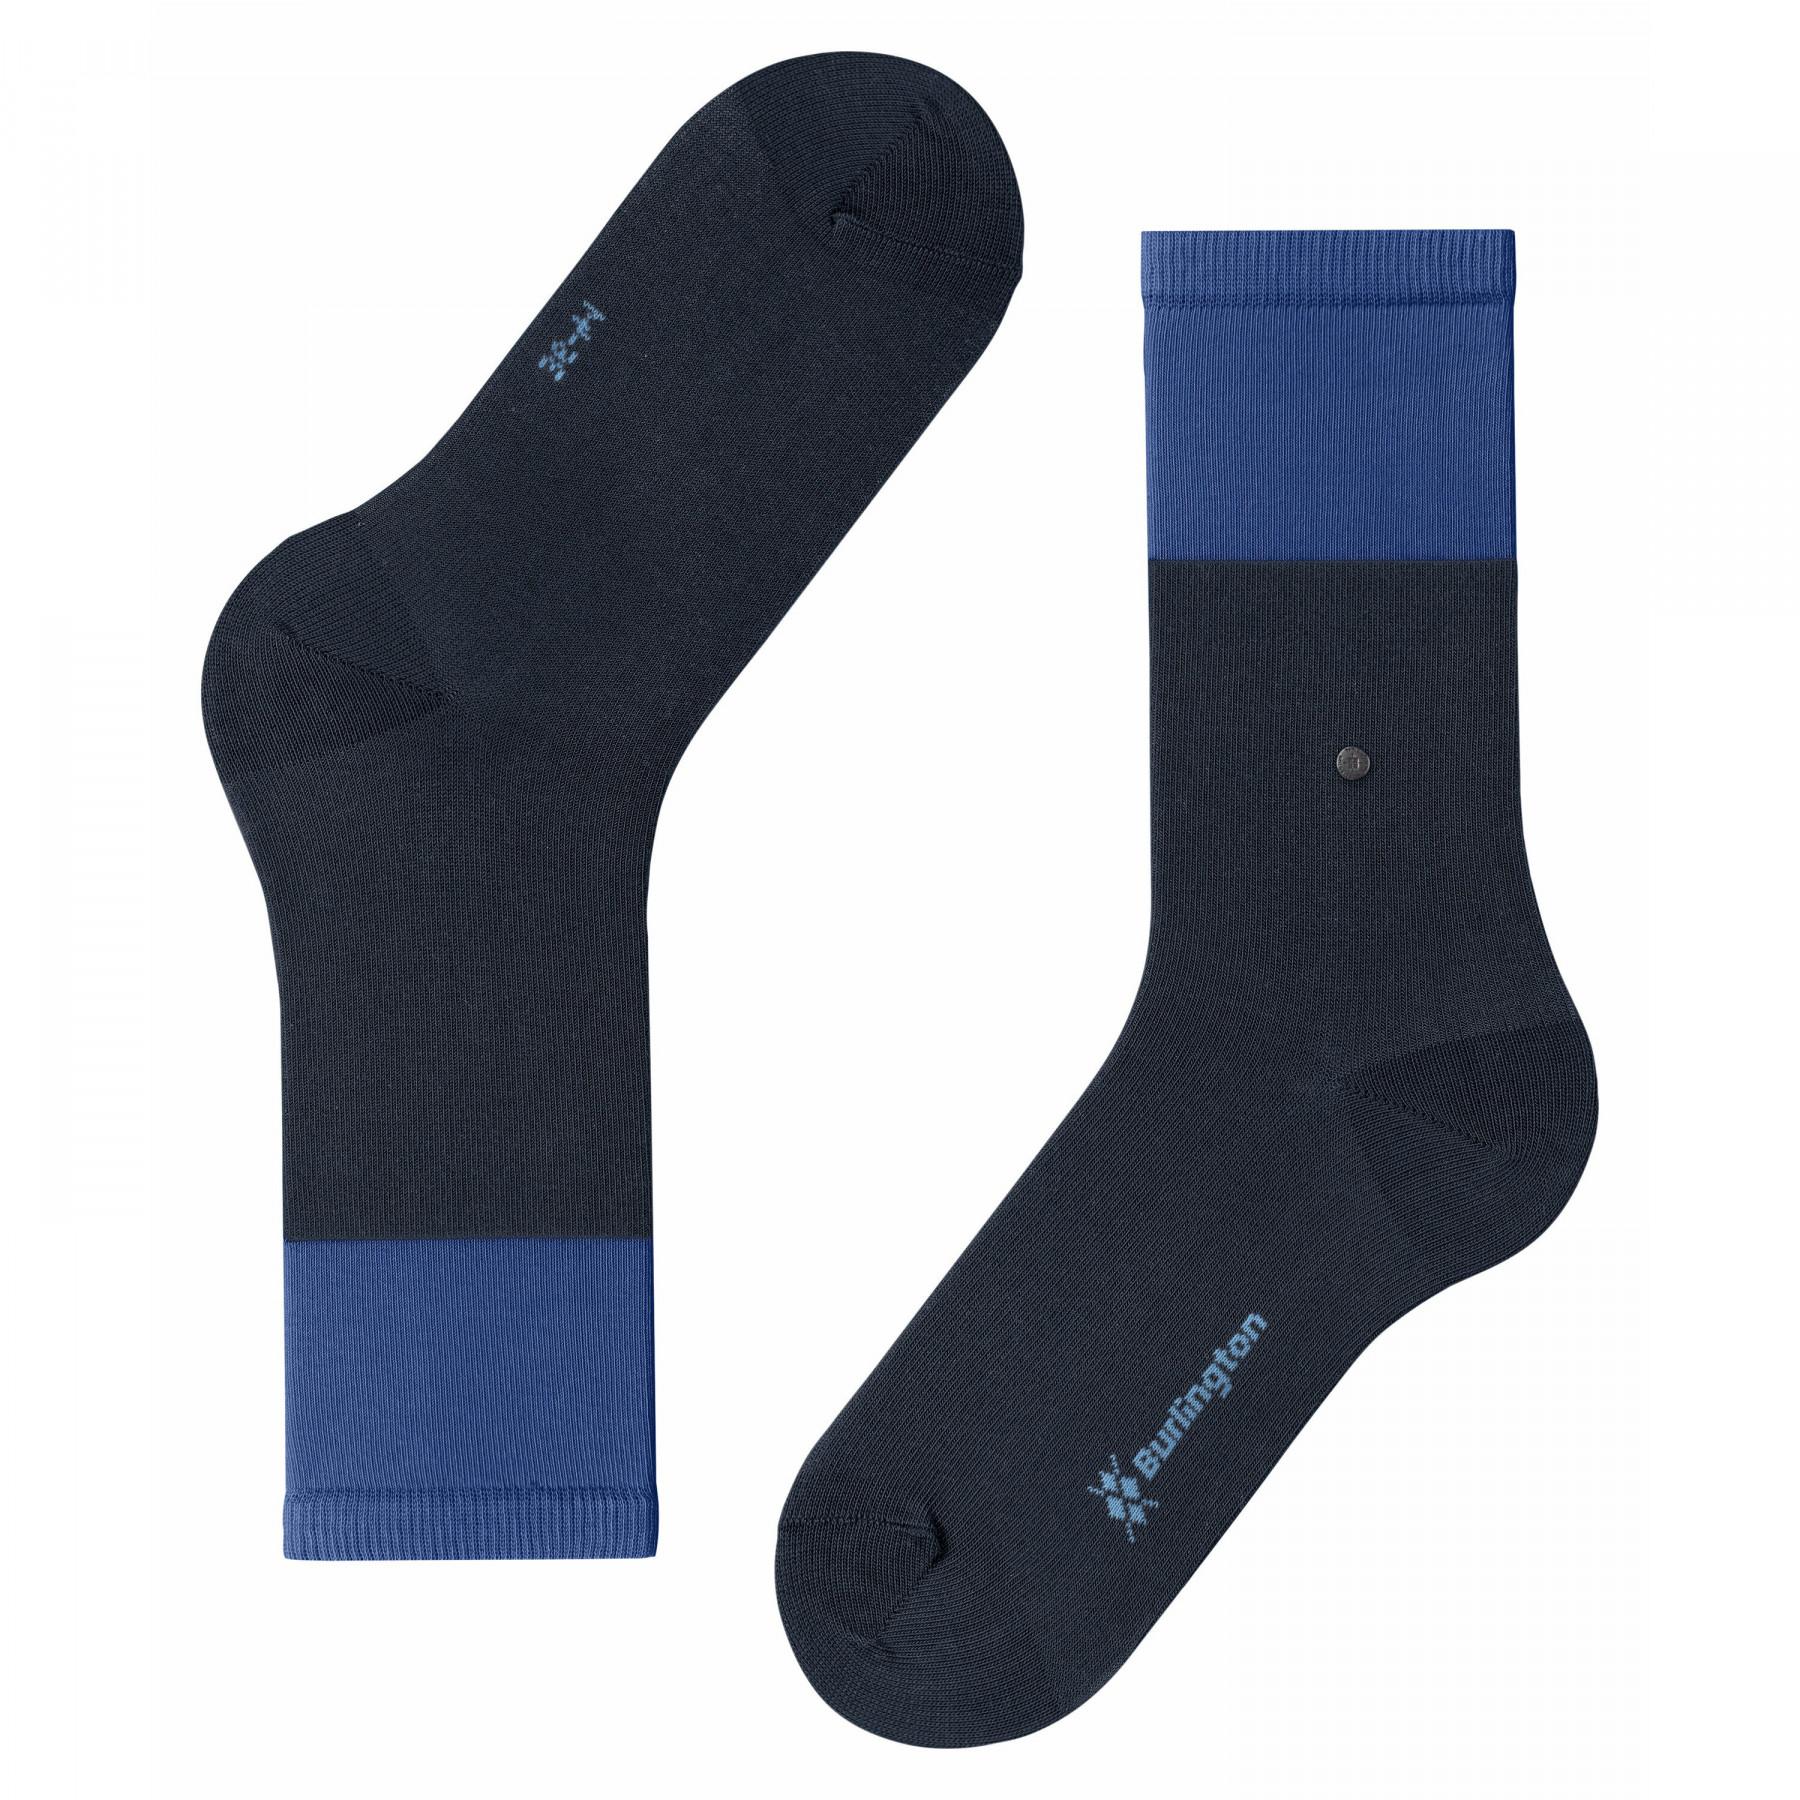 Socken für Frauen Burlington Margate Women SO